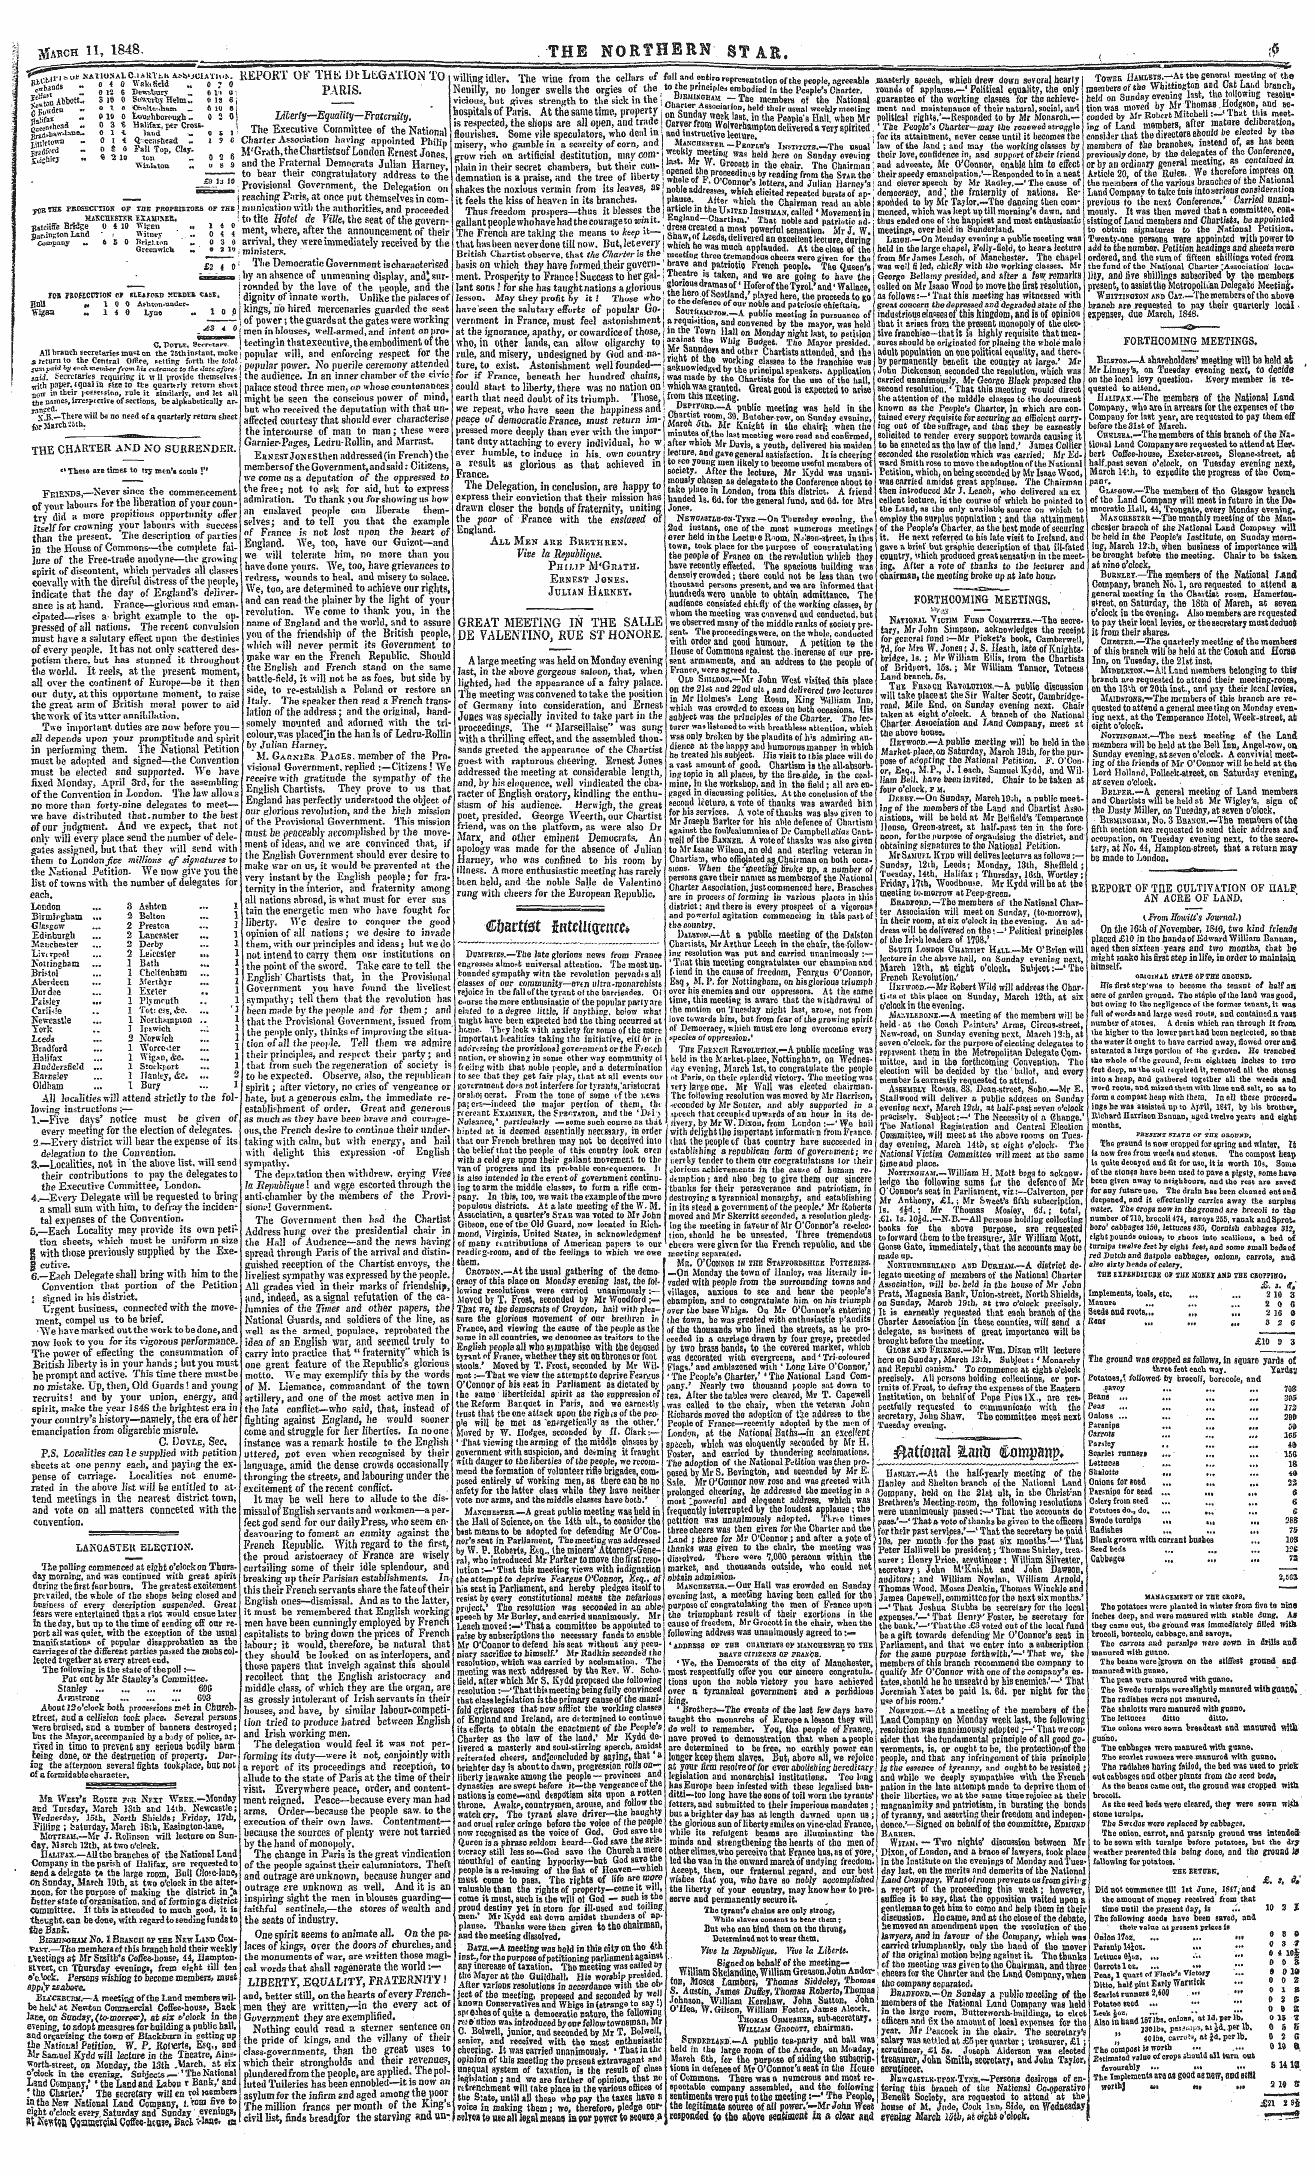 Northern Star (1837-1852): jS F Y, 3rd edition - Fob Pboeecftiok 07 Sleitoed Sckdeb Ca5e....